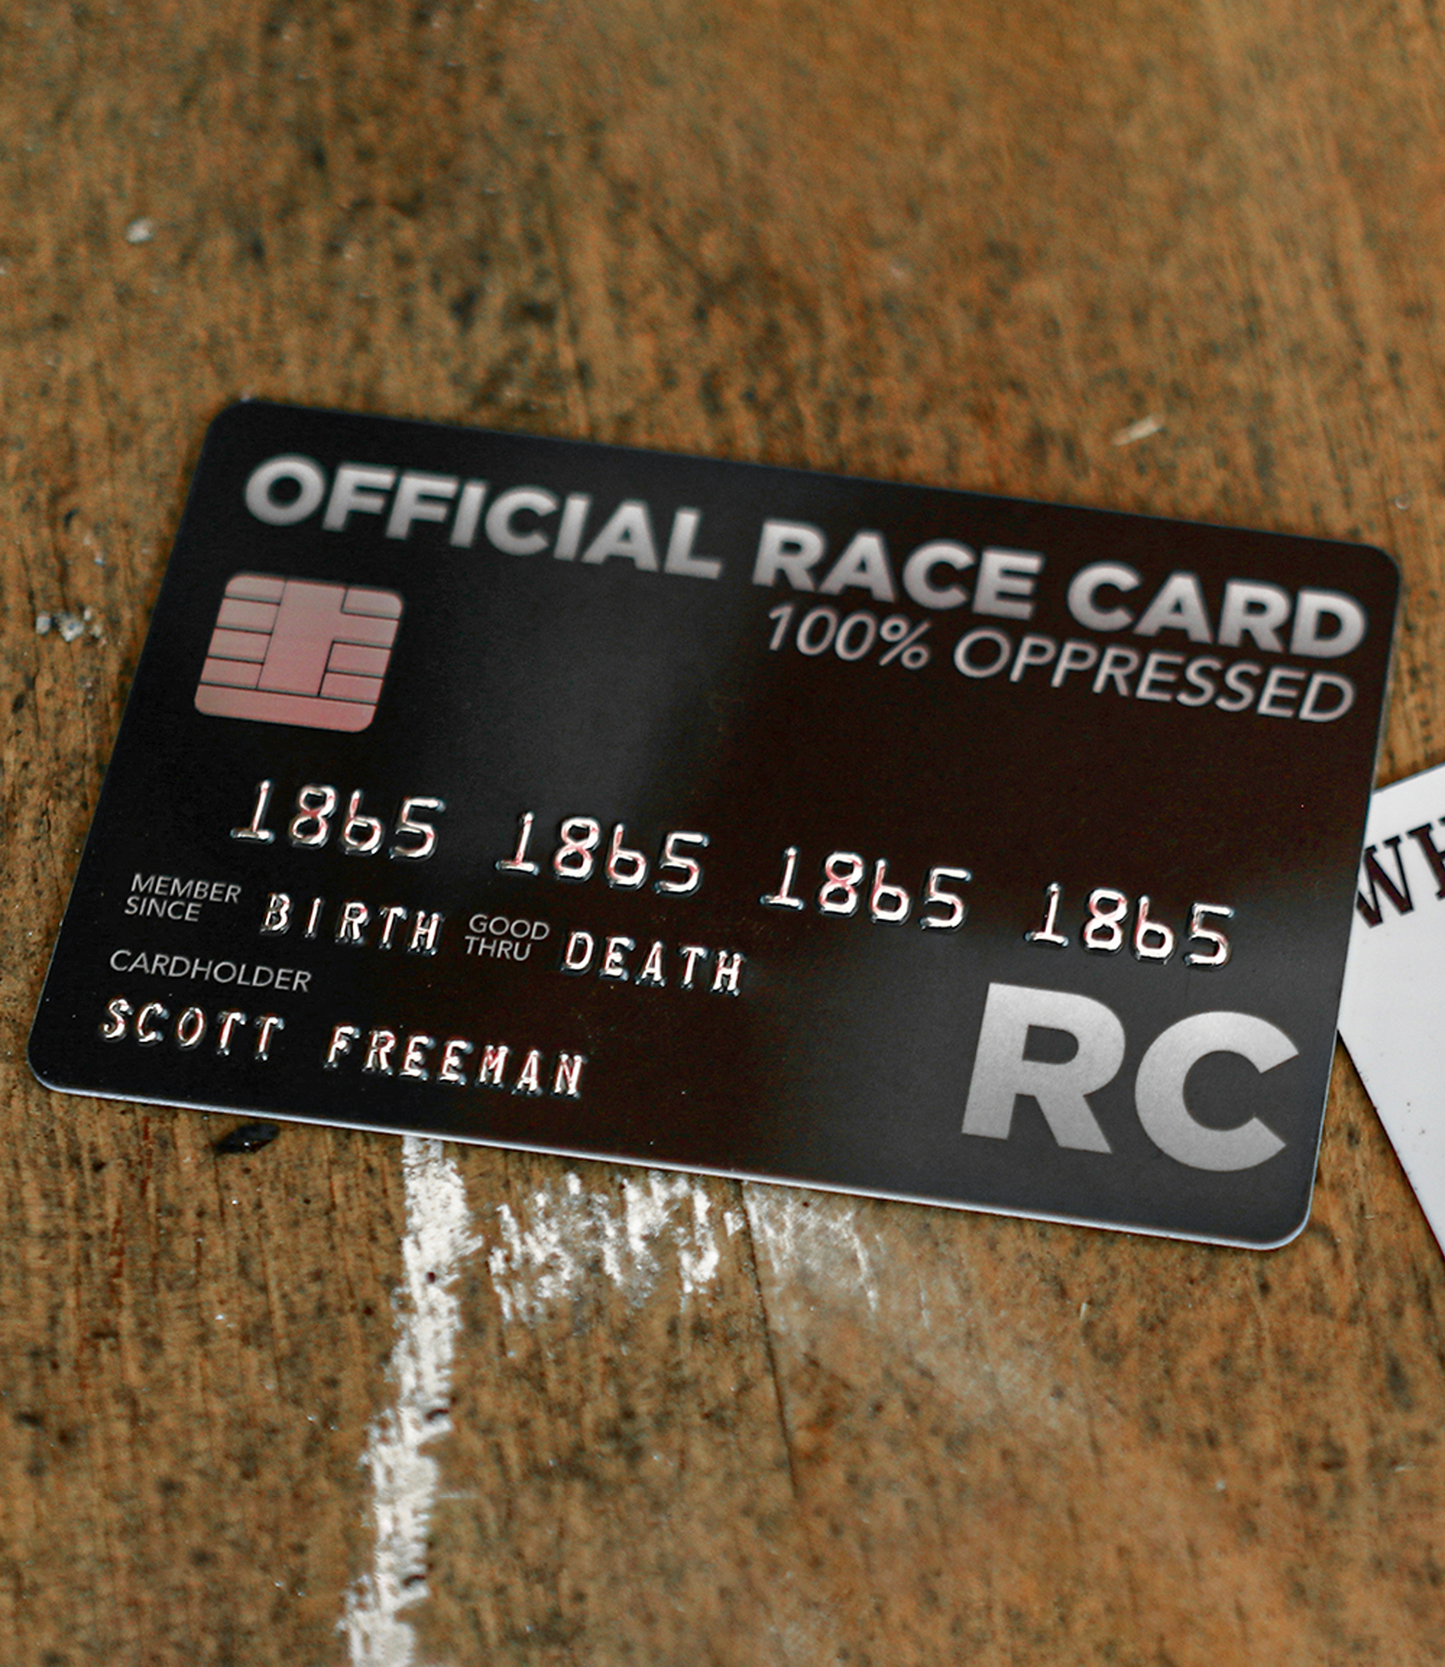 Official Race Card